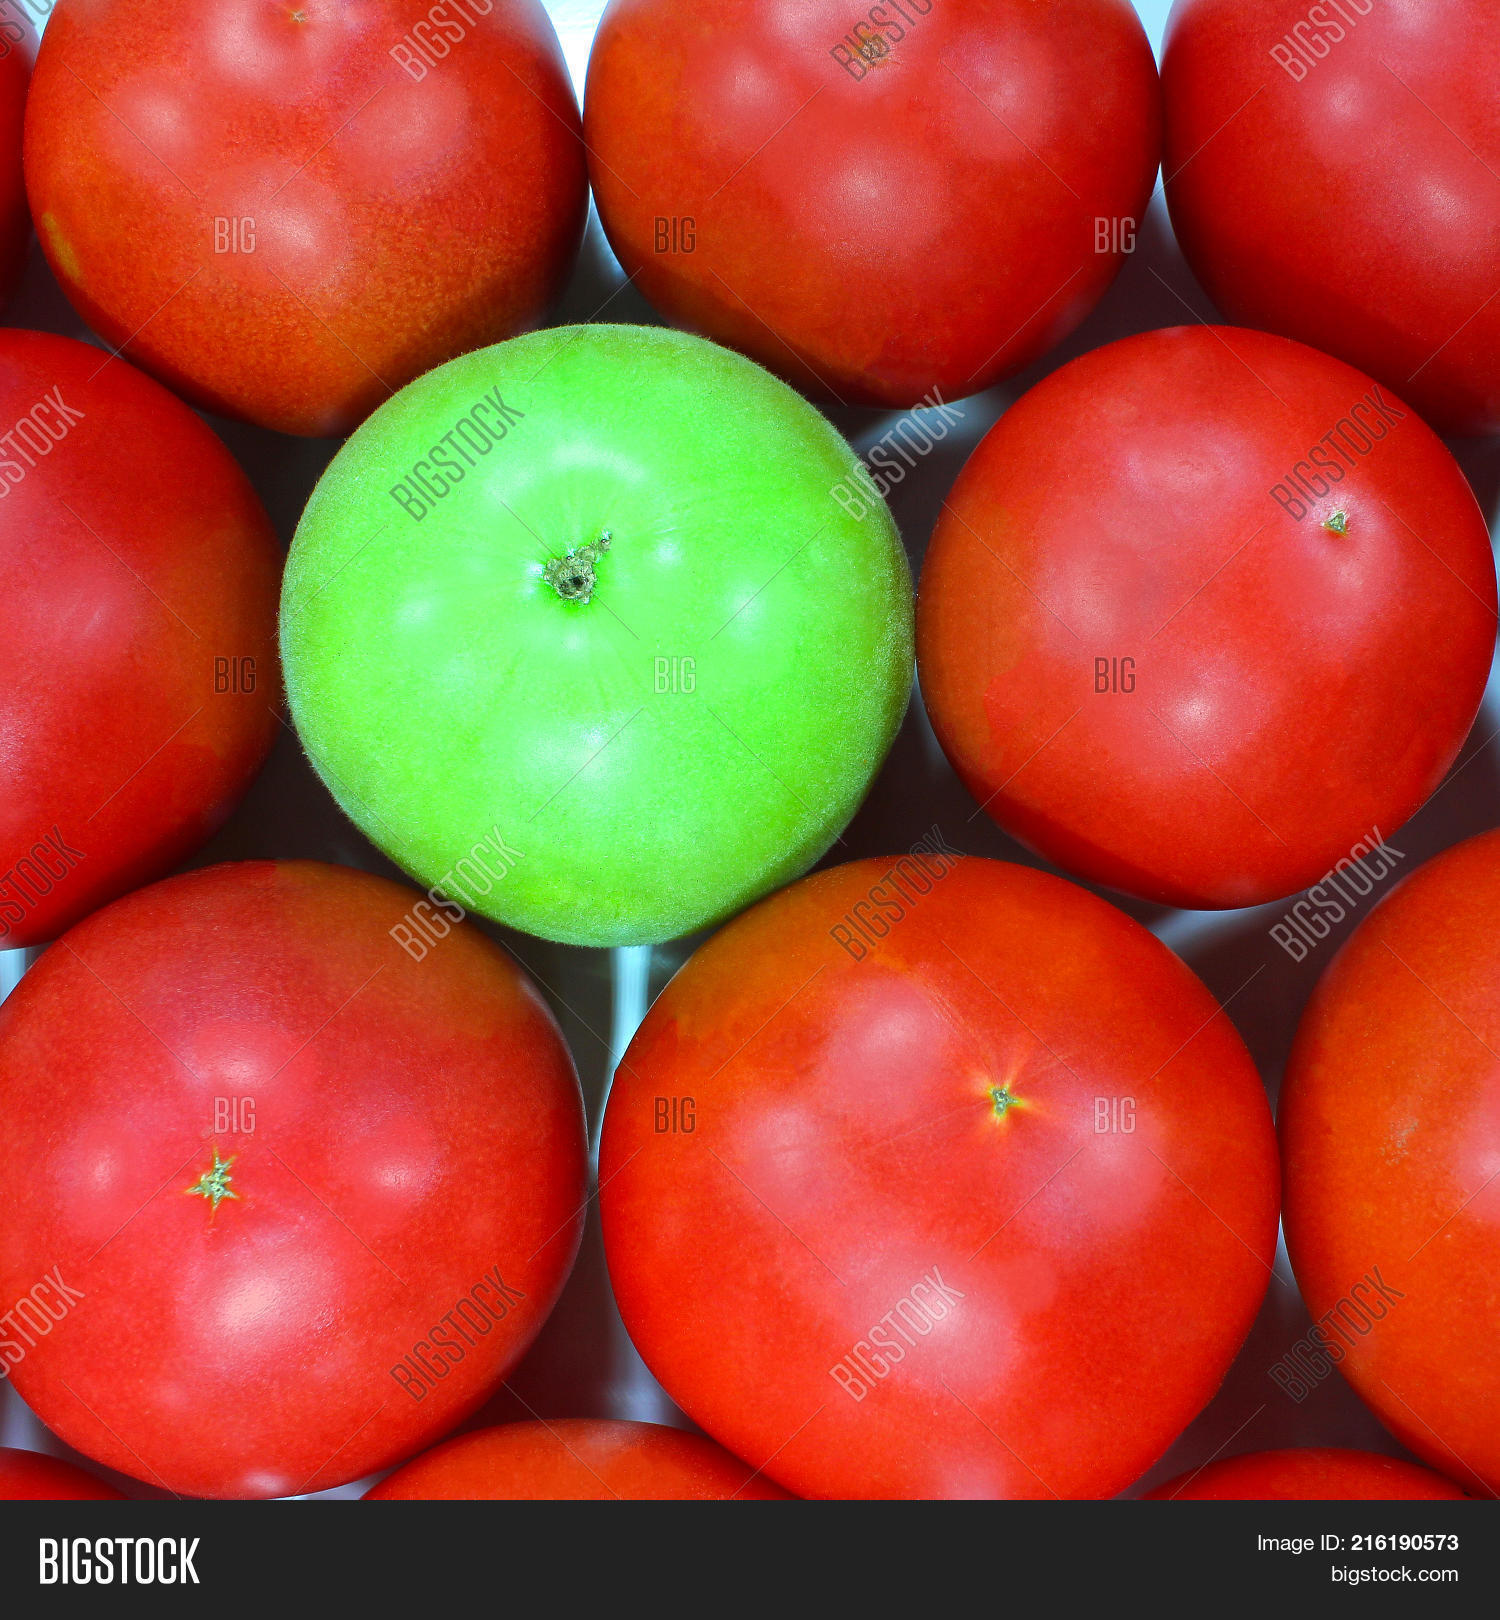 Many Mature Red Tomatoes Green Image & Photo | Bigstock